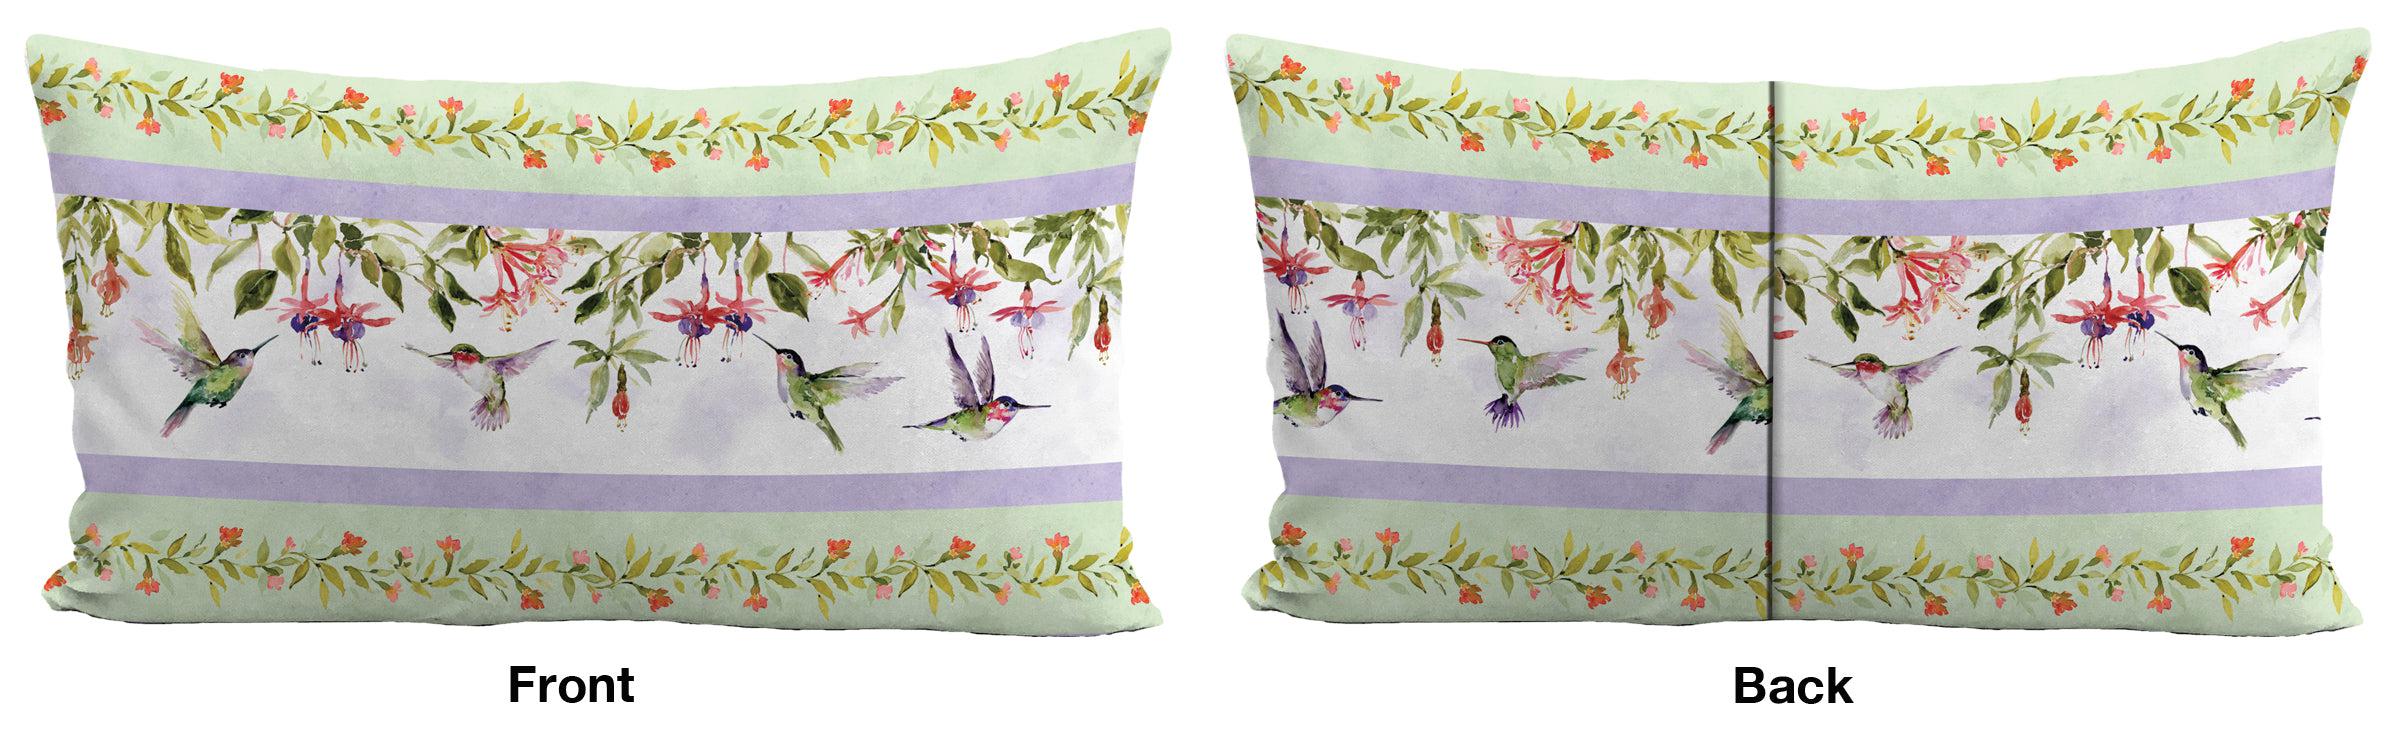 Basic Rectangular Pillow - Free Digital Download-Wilmington Prints-My Favorite Quilt Store